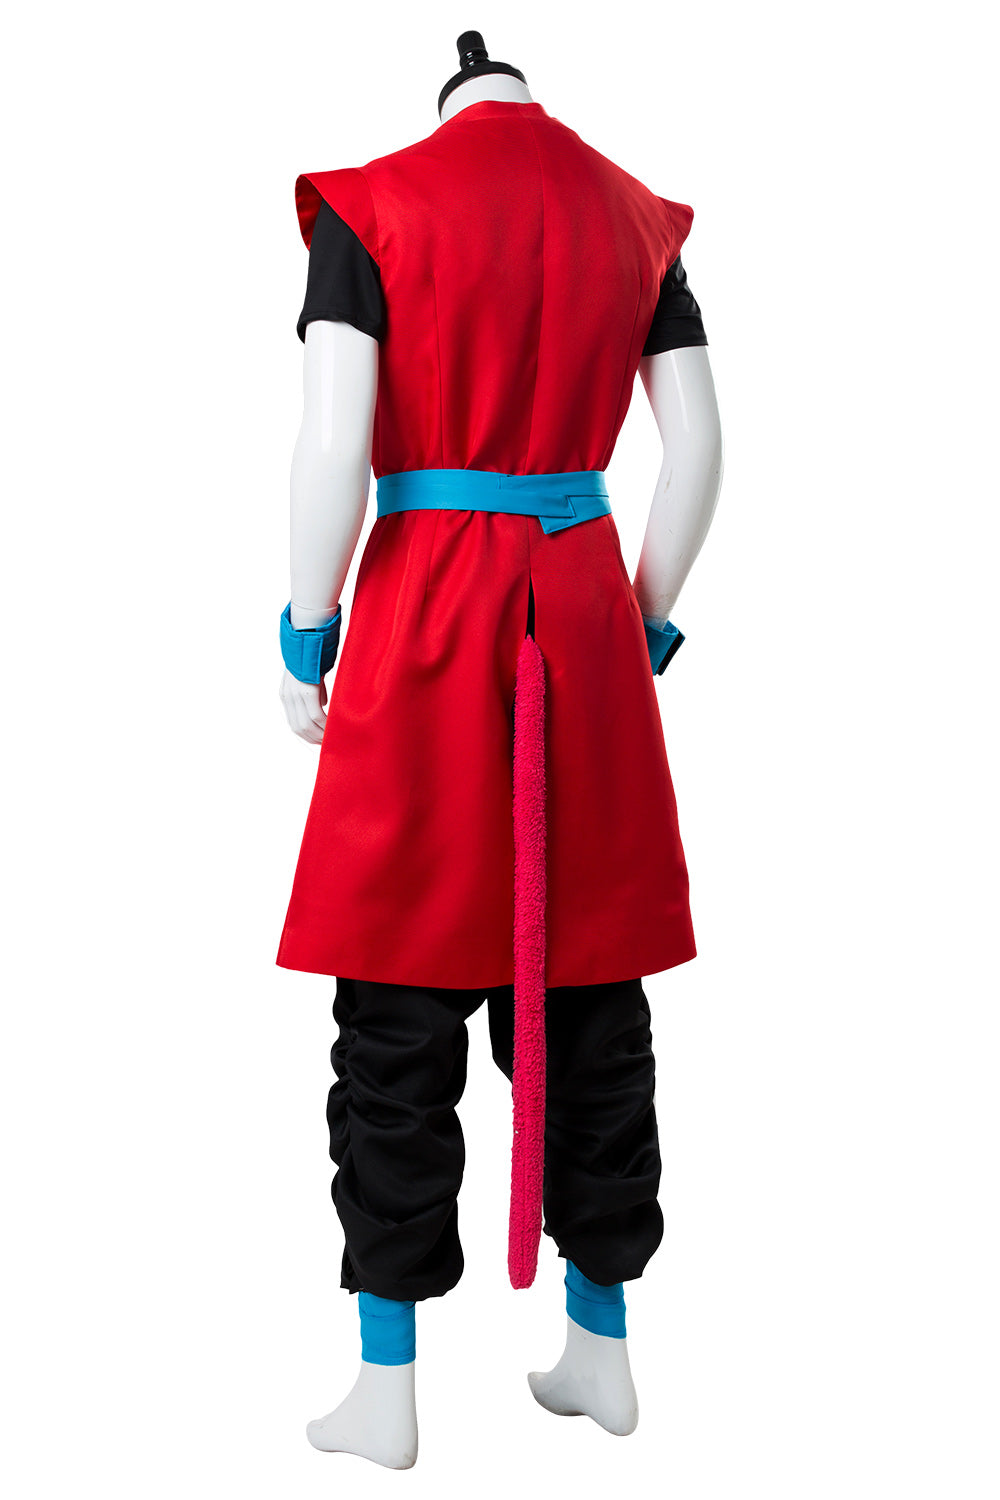 Super Dragon Ball Heroes: Universe Mission Son Goku Super Saiyan 4 Cosplay Costume